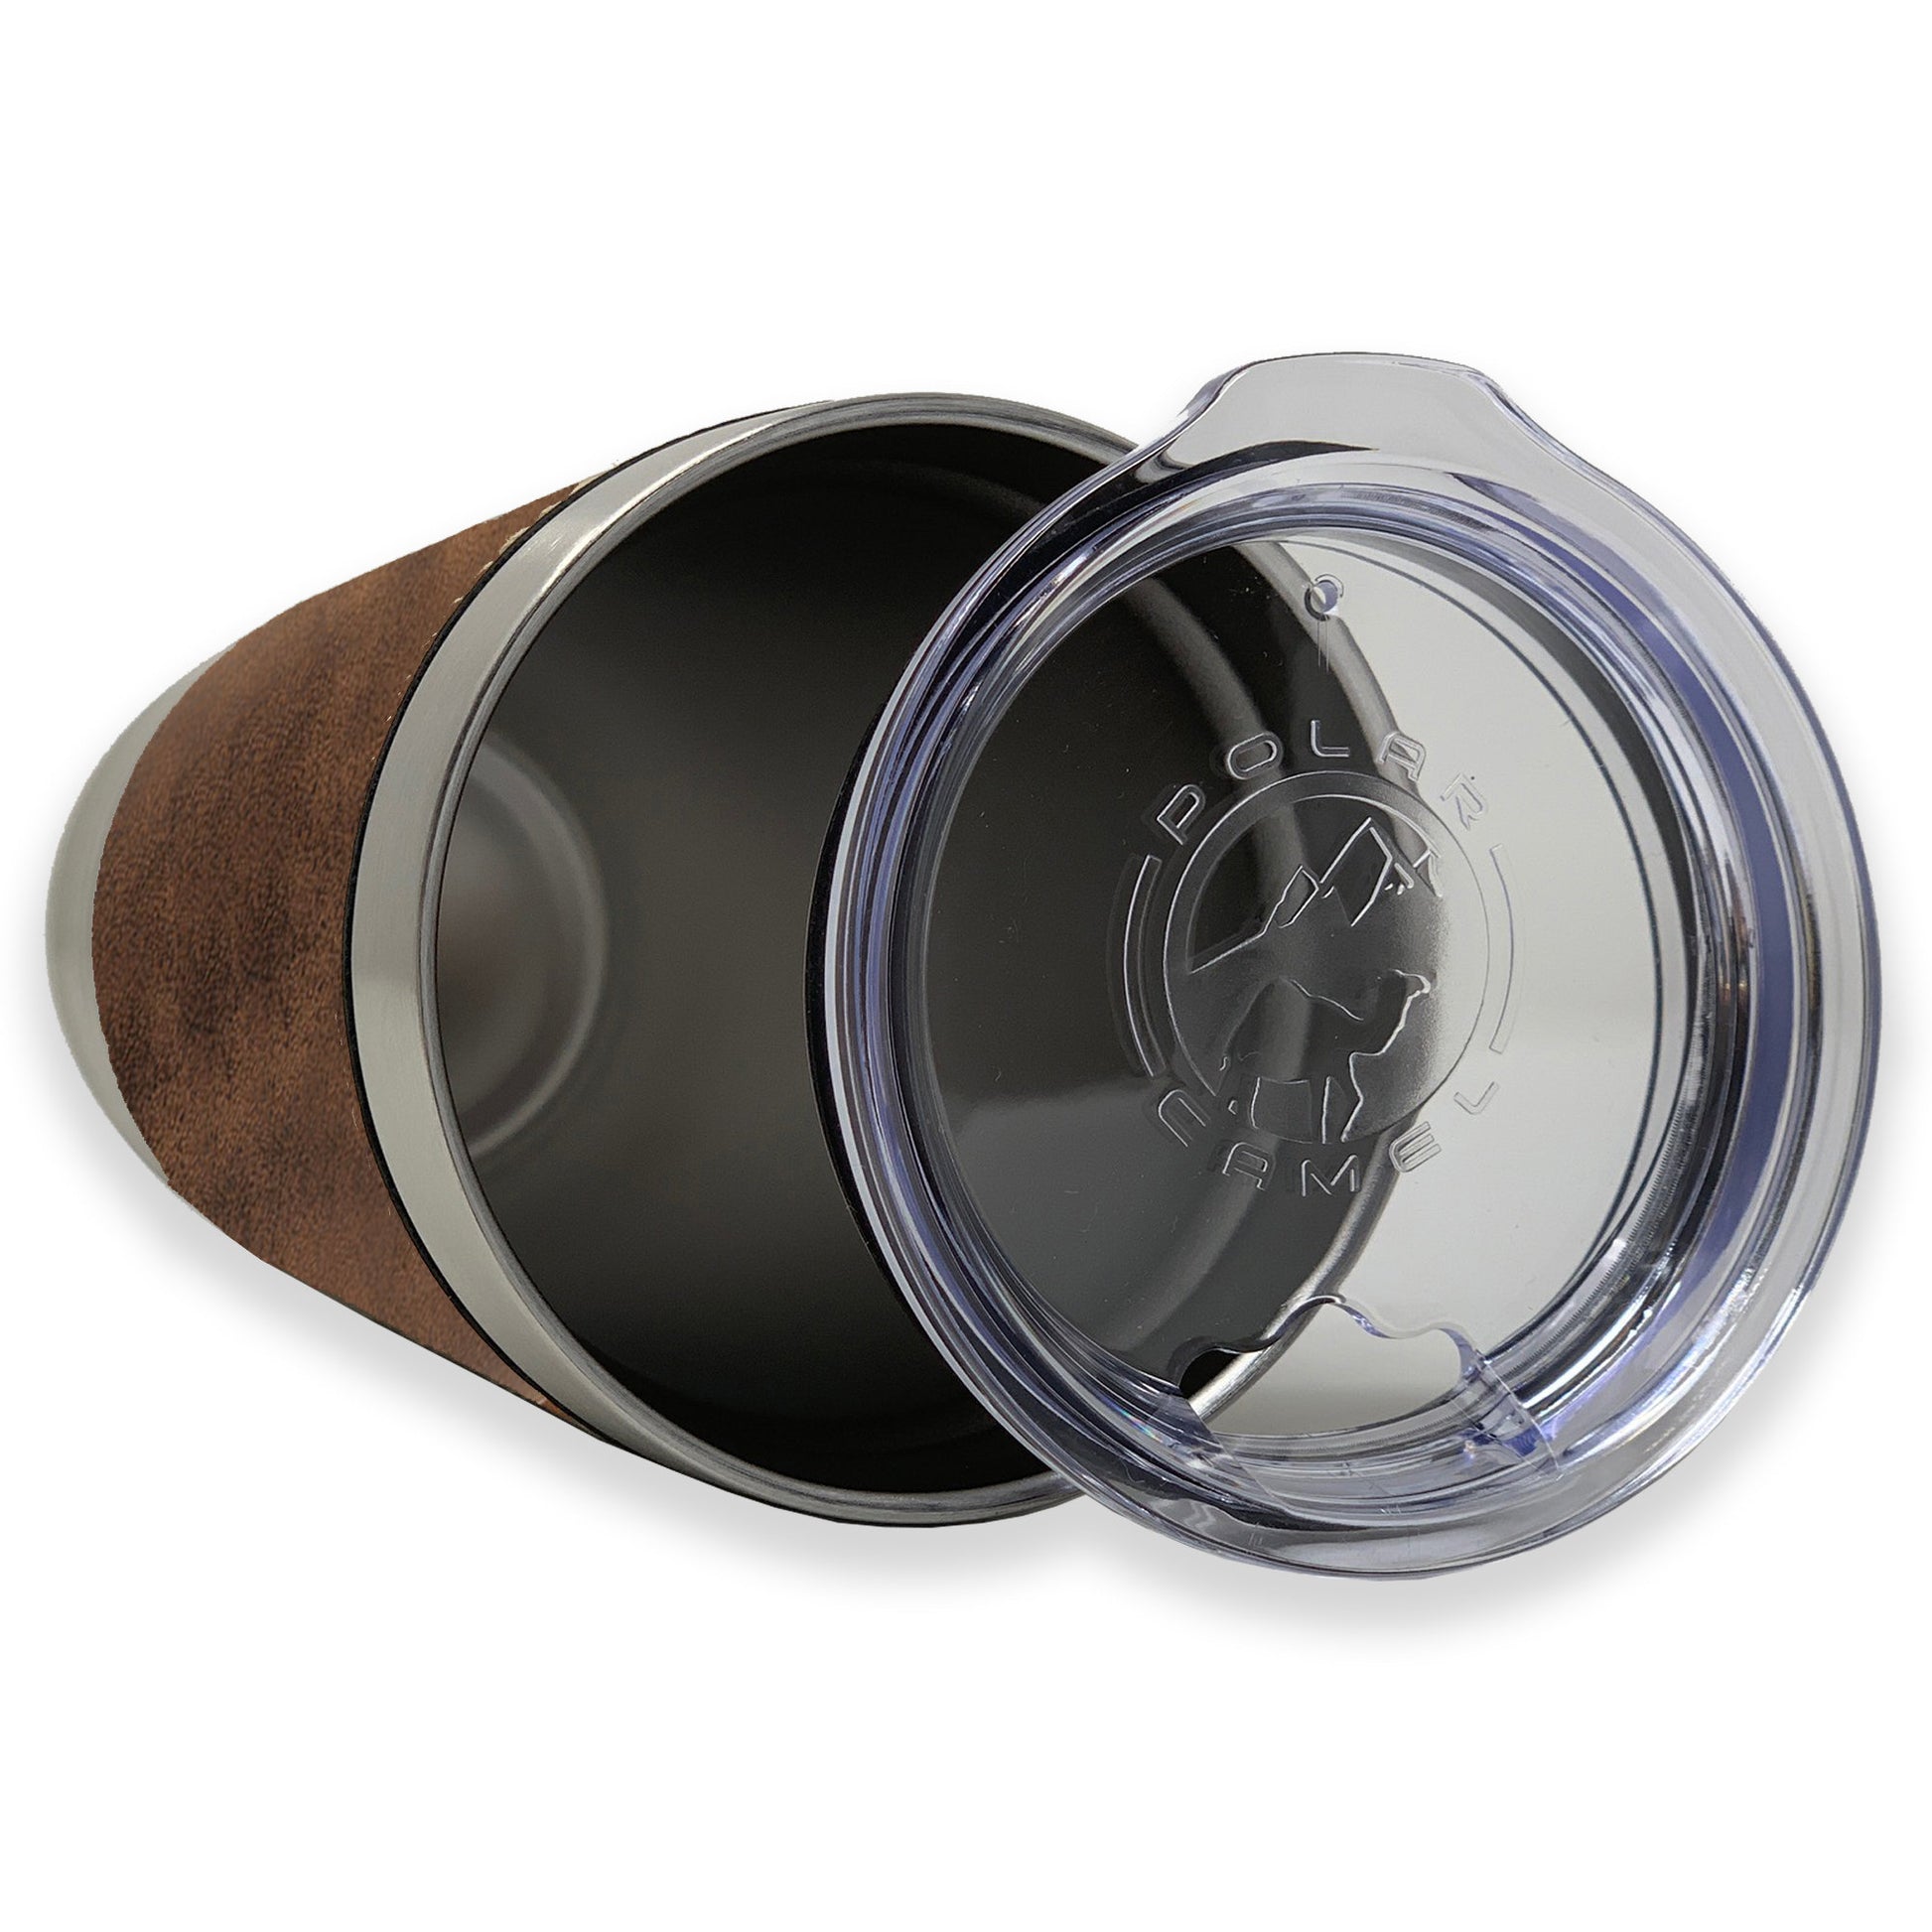 20oz Faux Leather Tumbler Mug, Elk, Personalized Engraving Included - LaserGram Custom Engraved Gifts